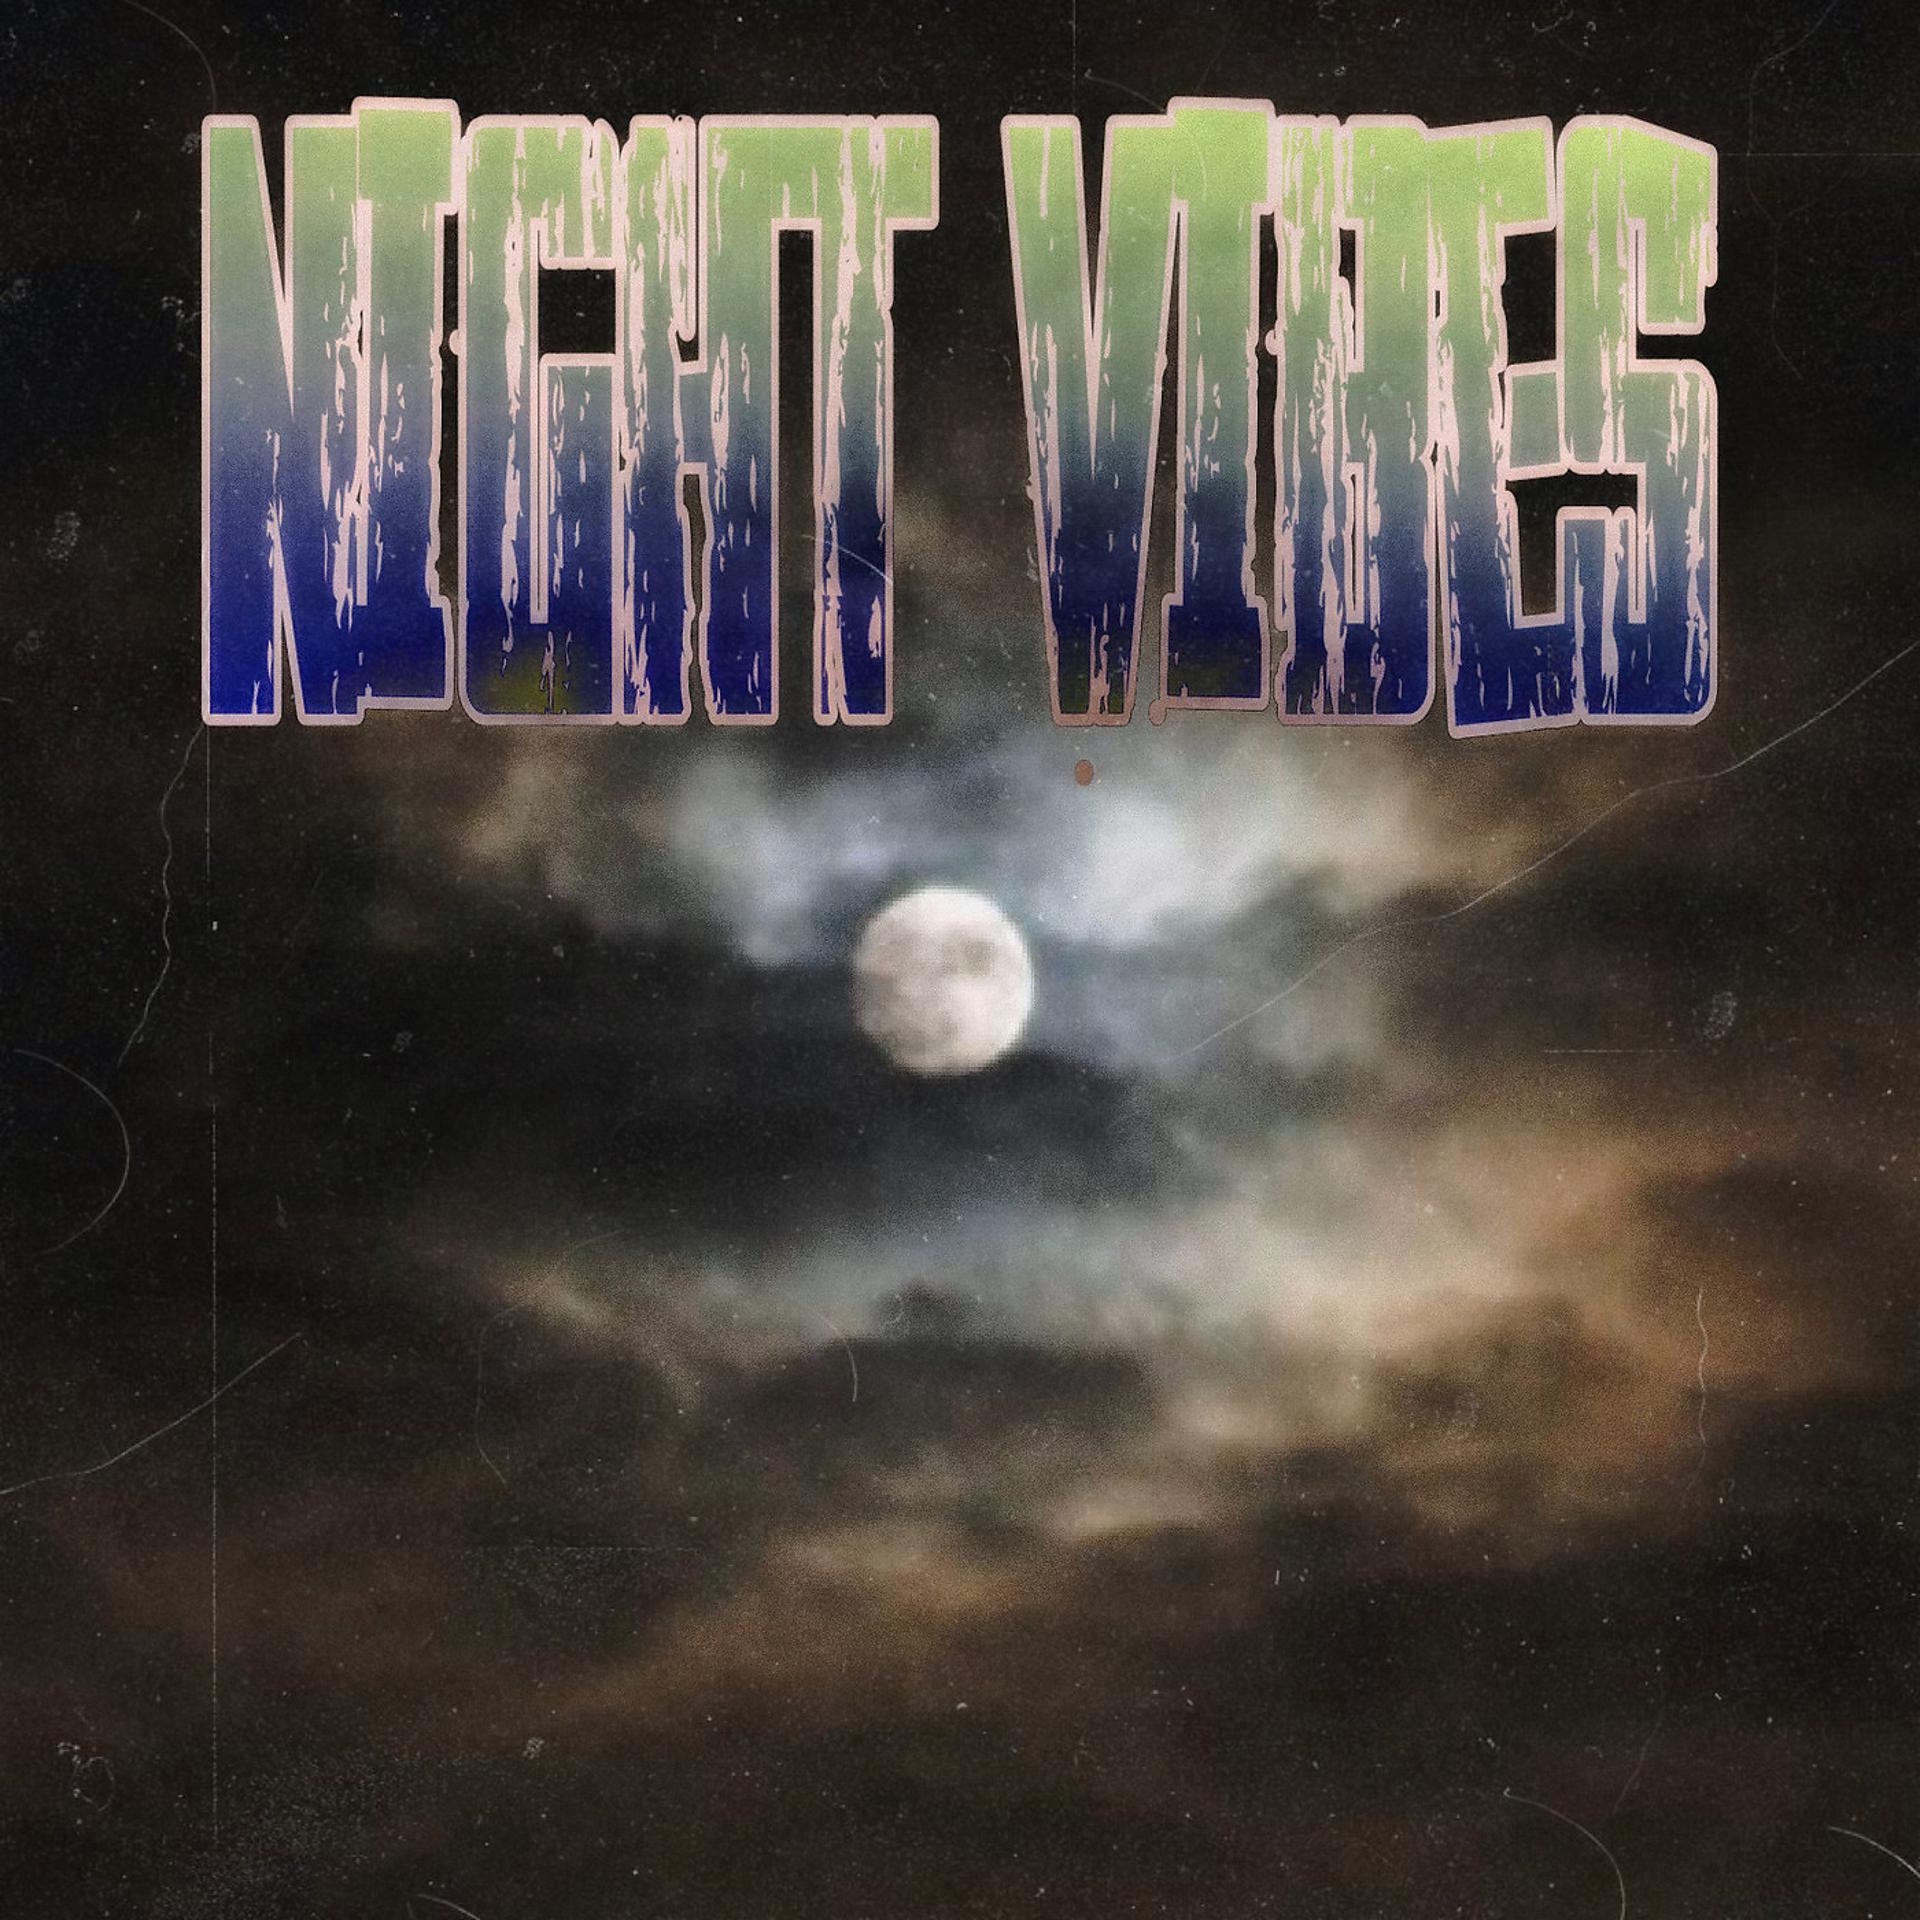 Постер альбома Night Vibe